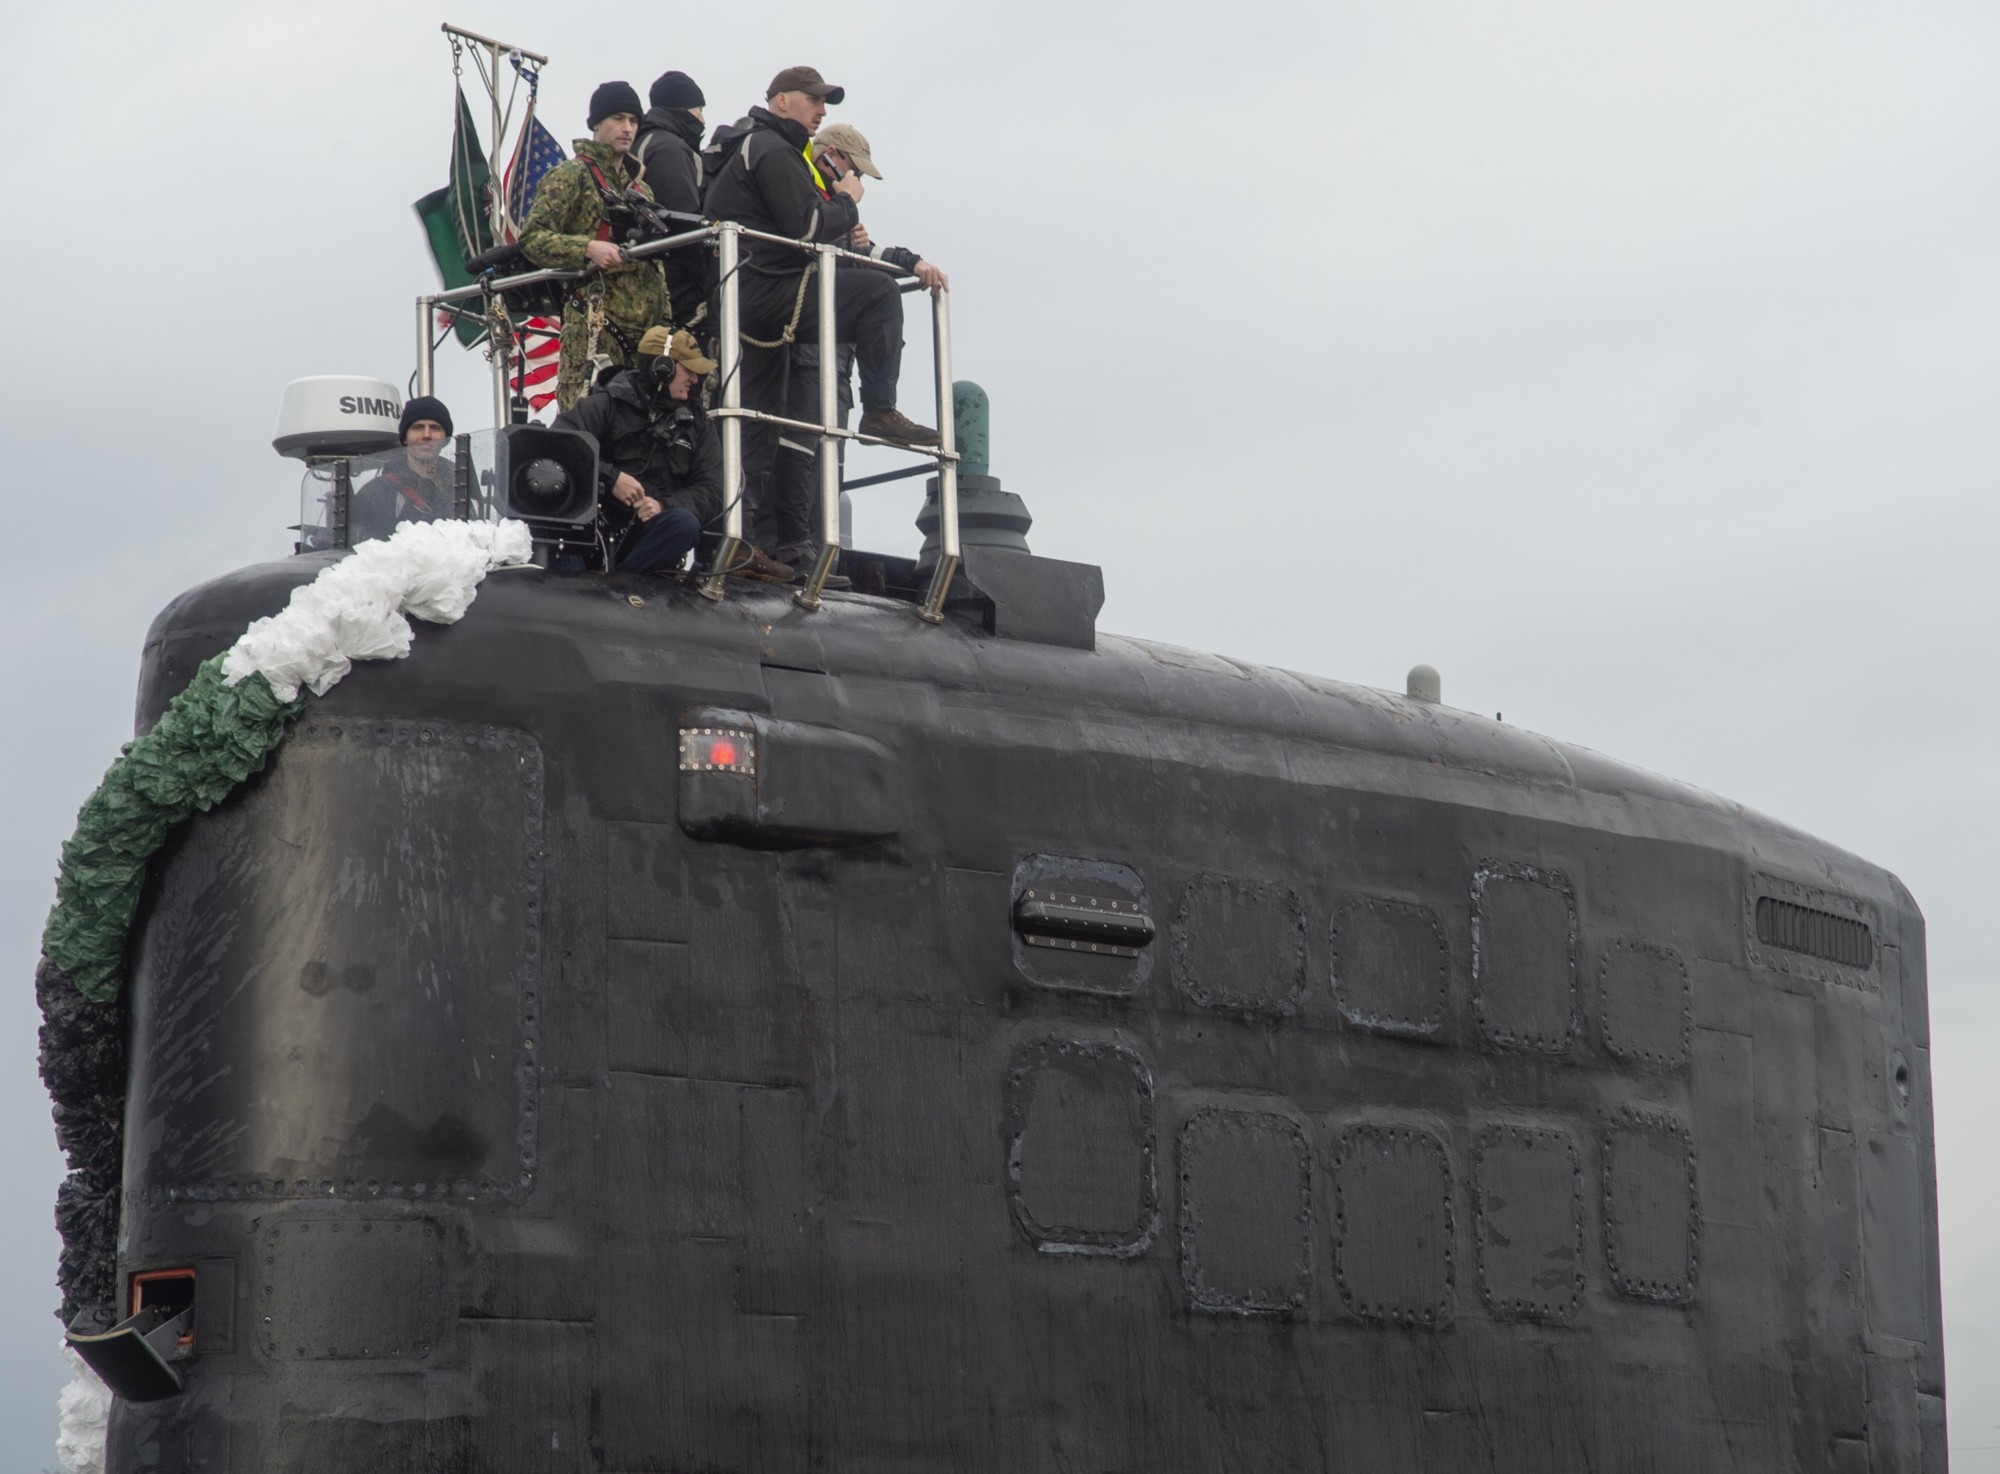 ssn-787 uss washington virginia class attack submarine us navy 42 returning maiden deployment